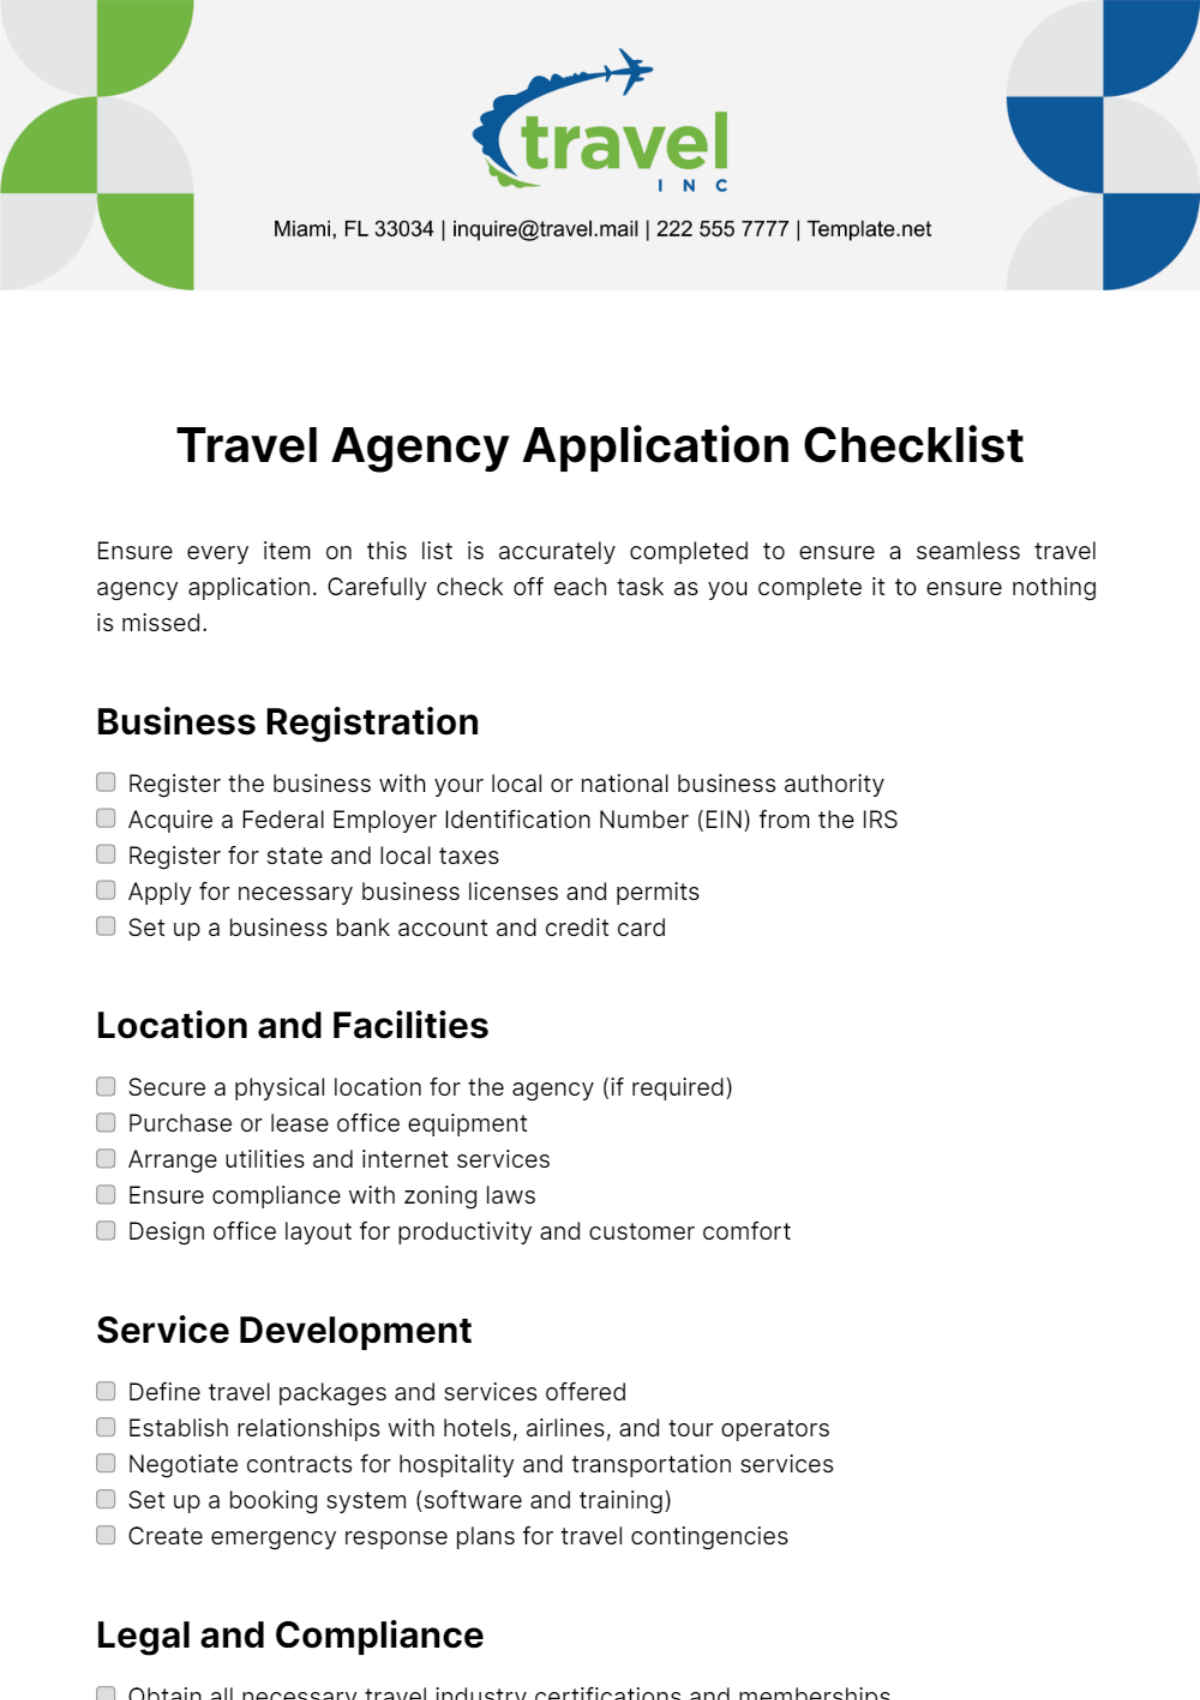 Travel Agency Application Checklist Template